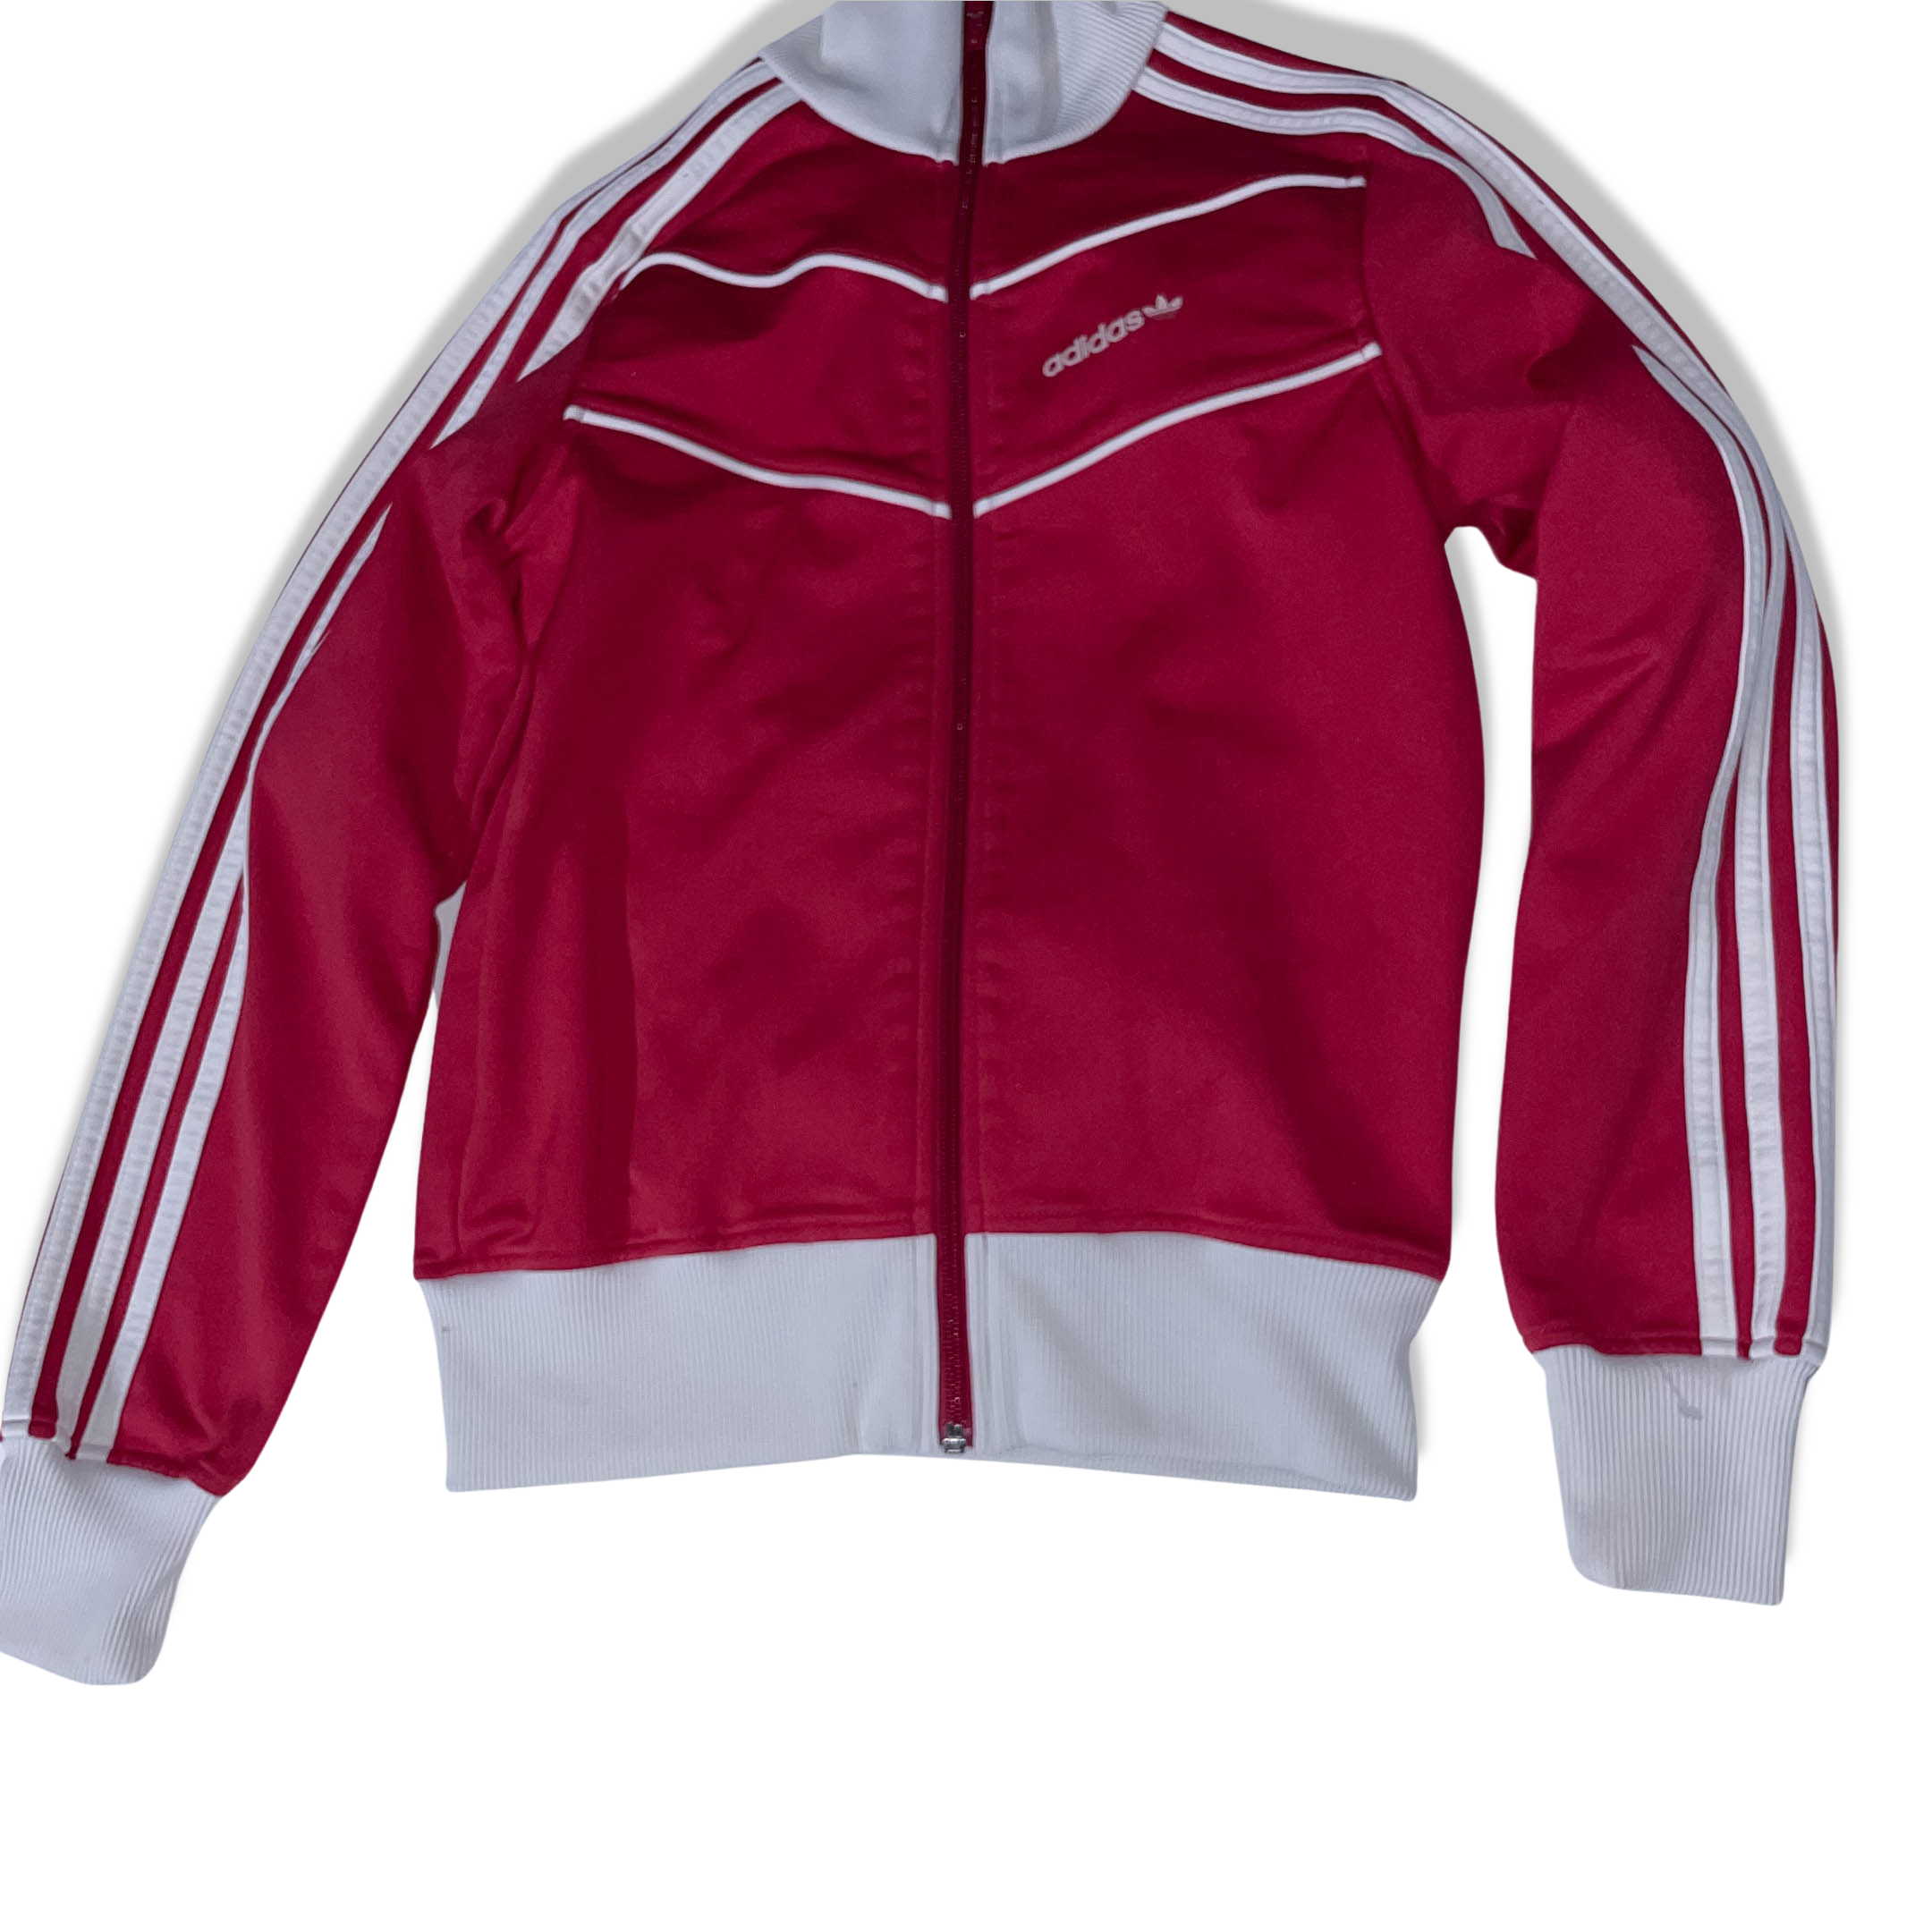 Vintage Adidas Originals vintage women zip small track top jacket red white made 2003